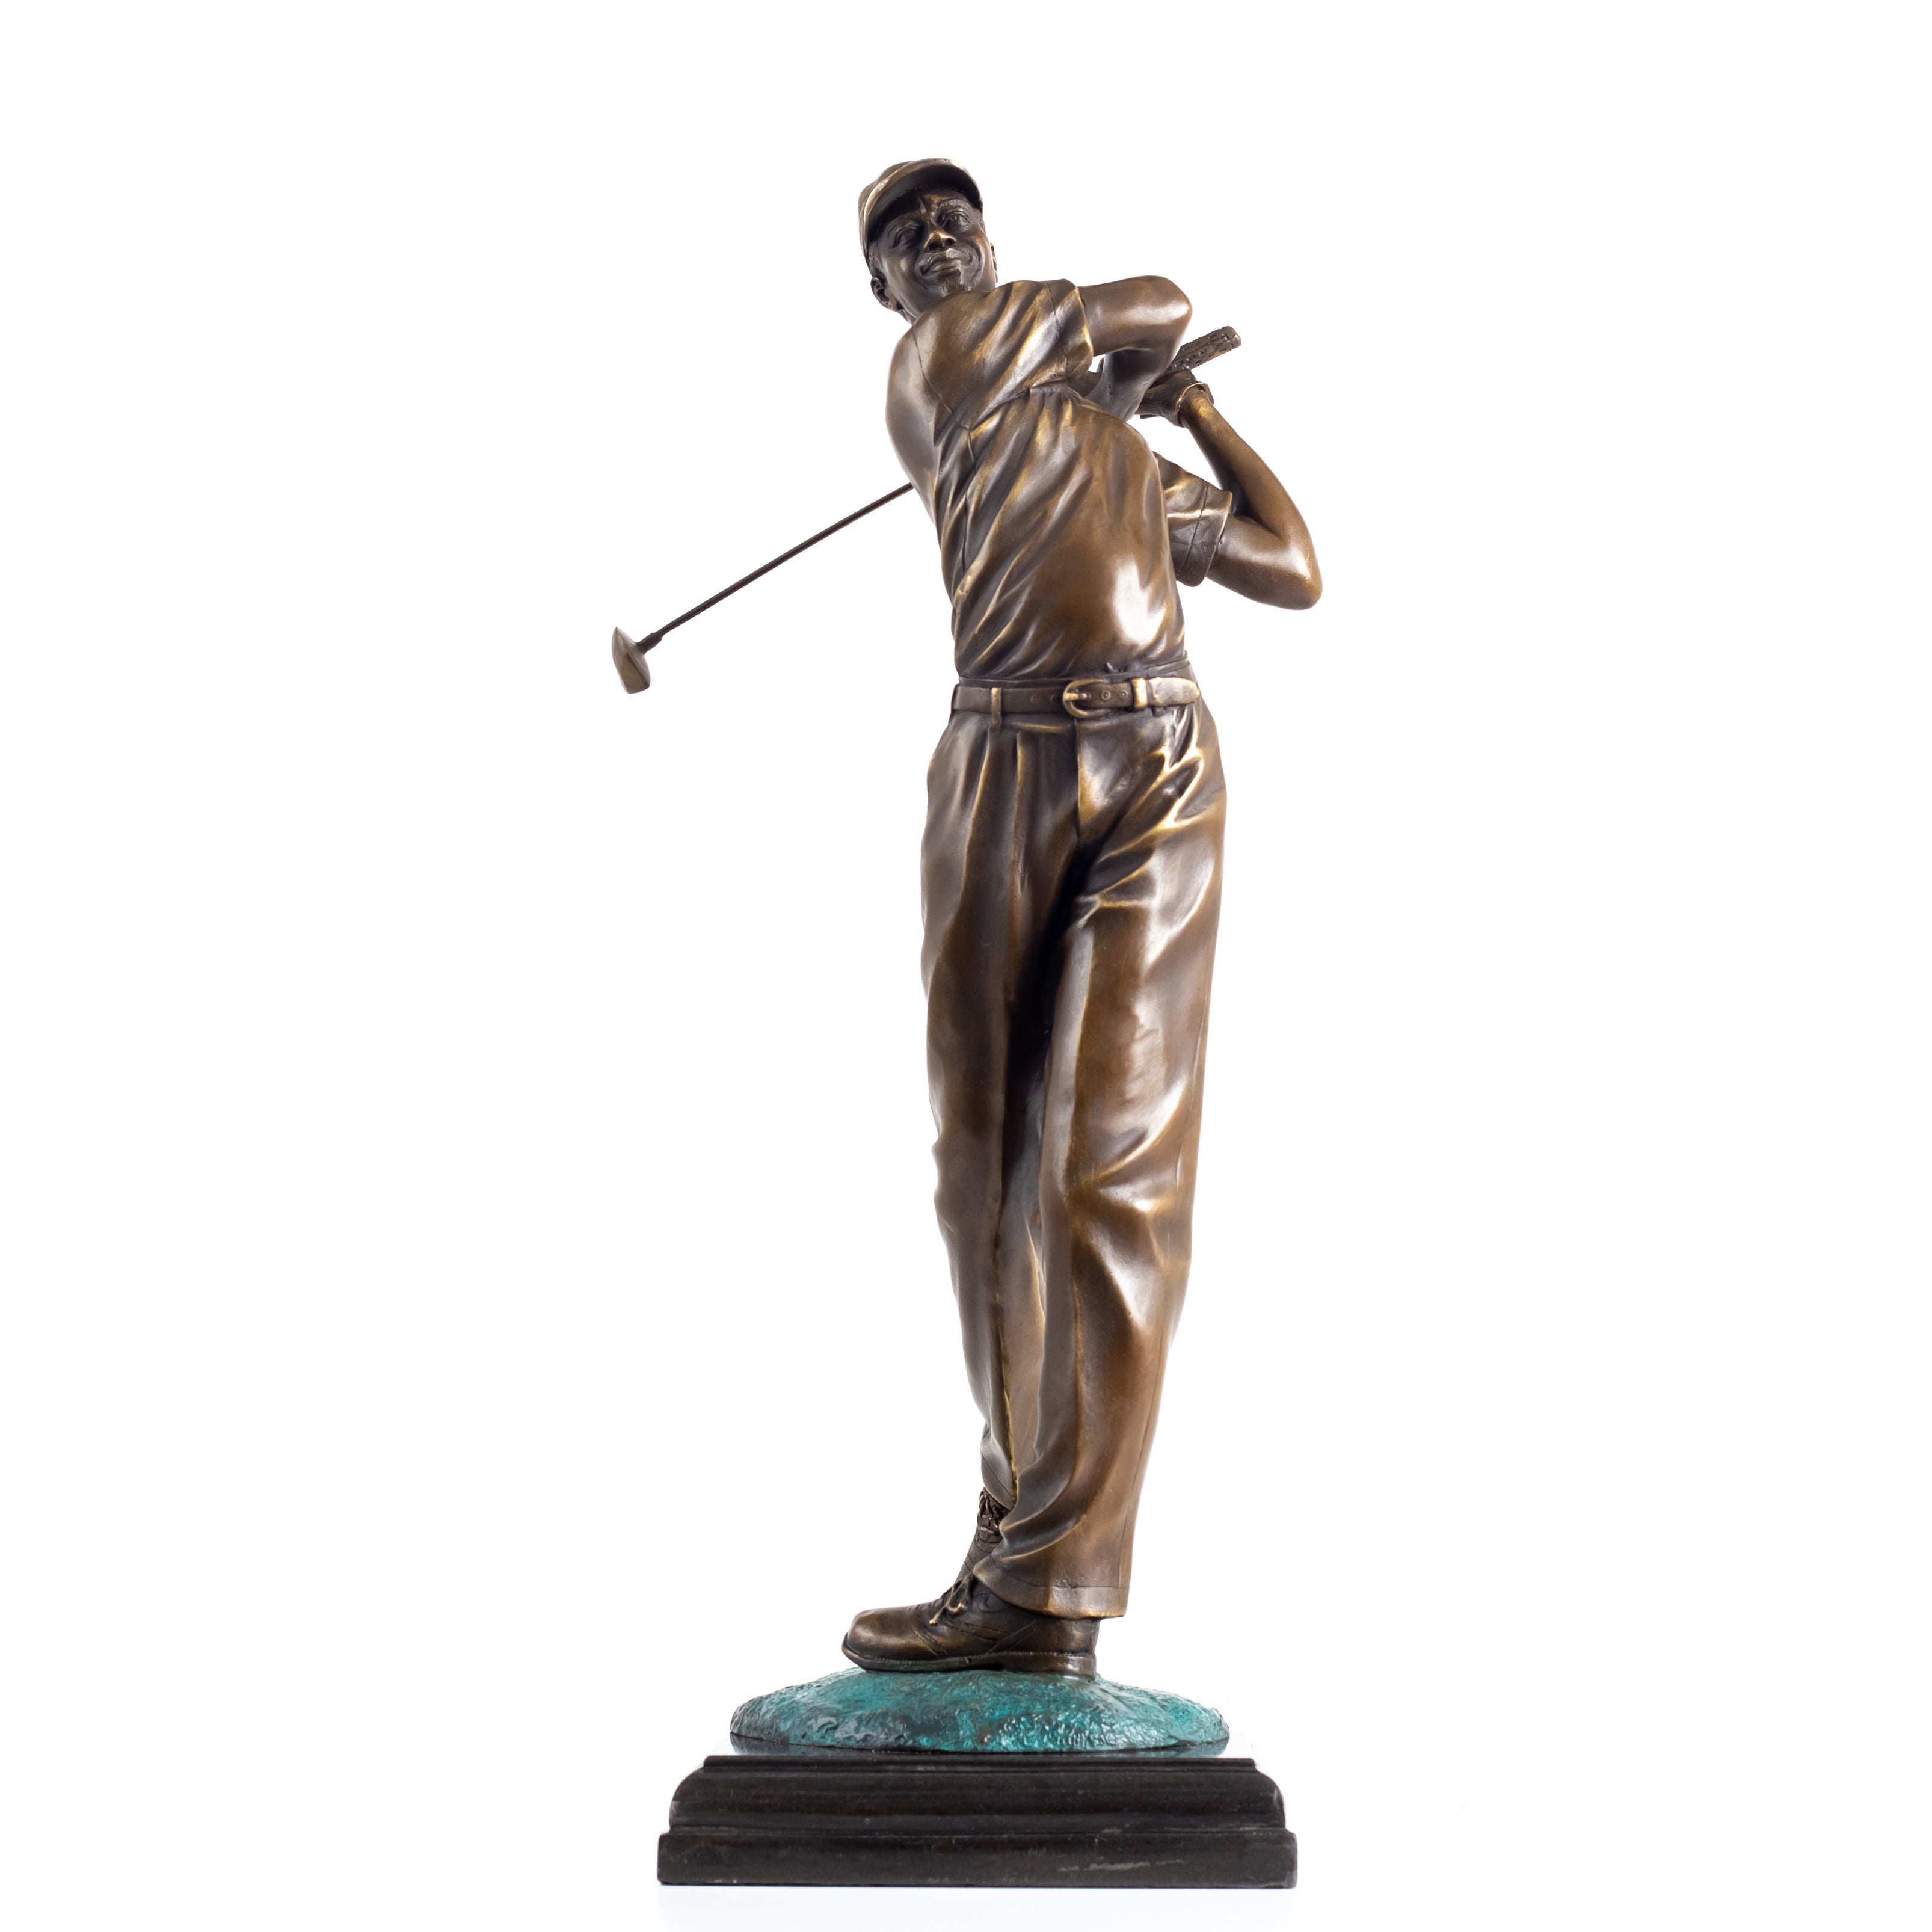 58cm Bronze Golf Man Statue Playing Golf Sculpture Bronze Golfer Art Figurine Bronze Casting Crafts Ornament For Home Decor Gift